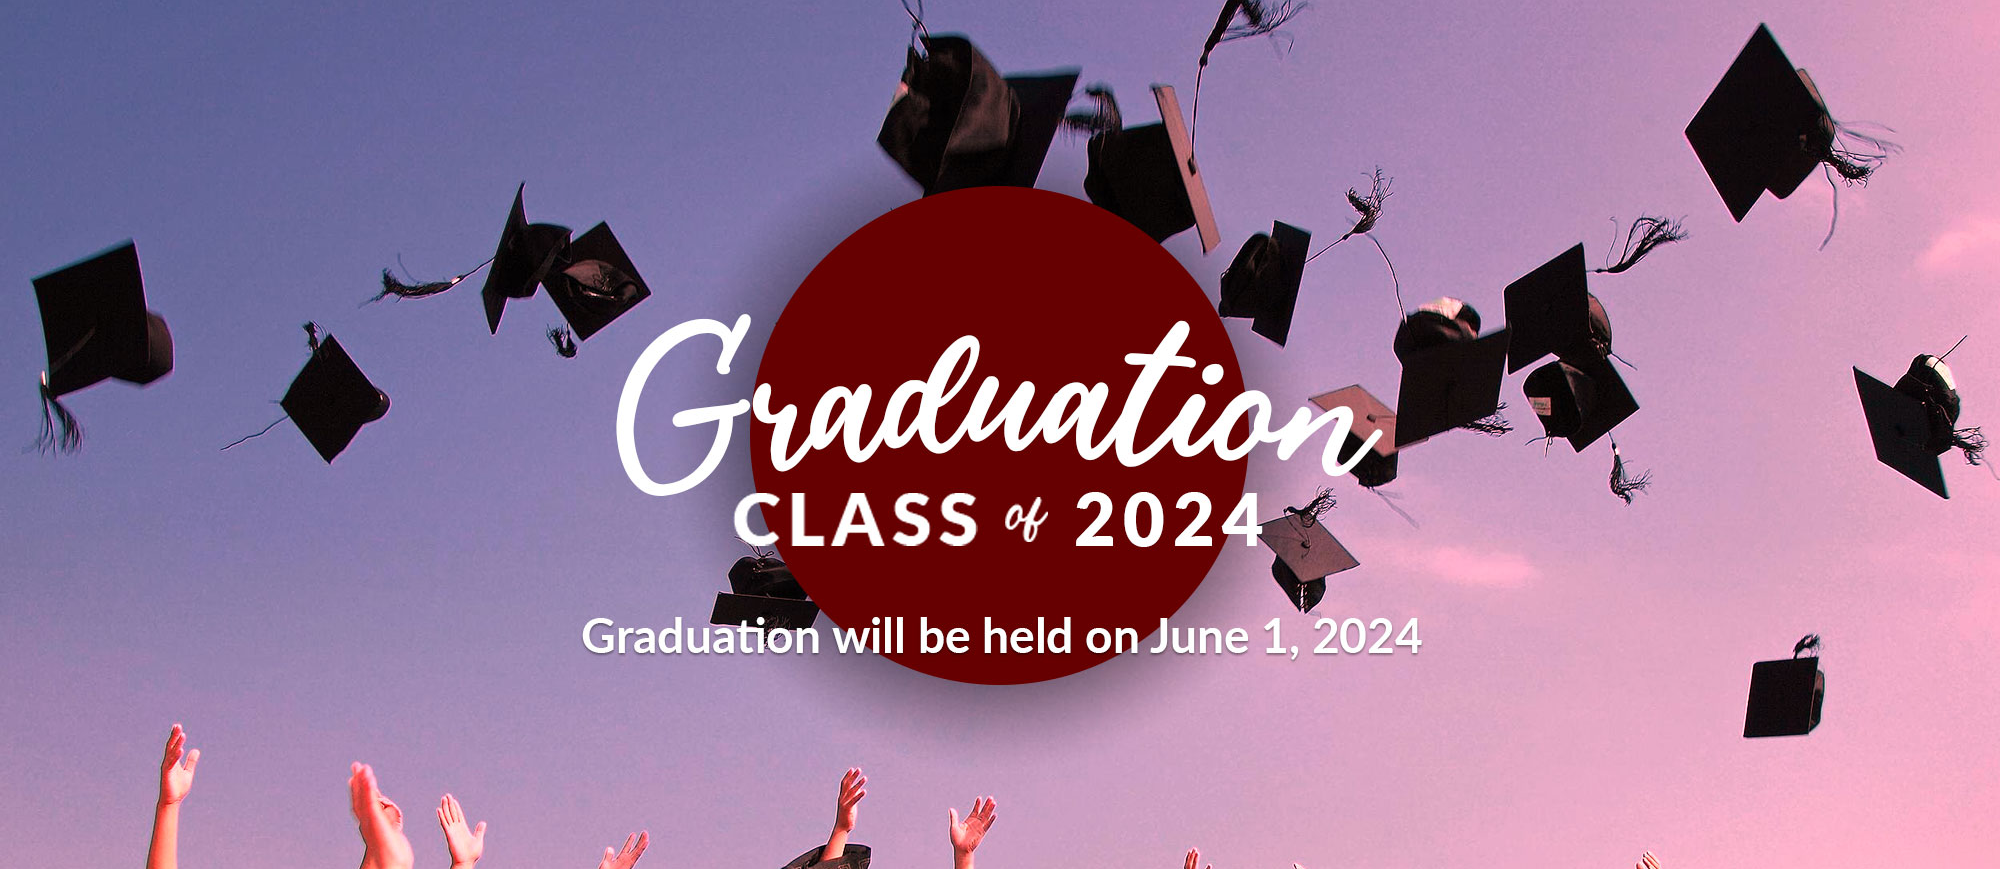 Graduation, Class of 2024